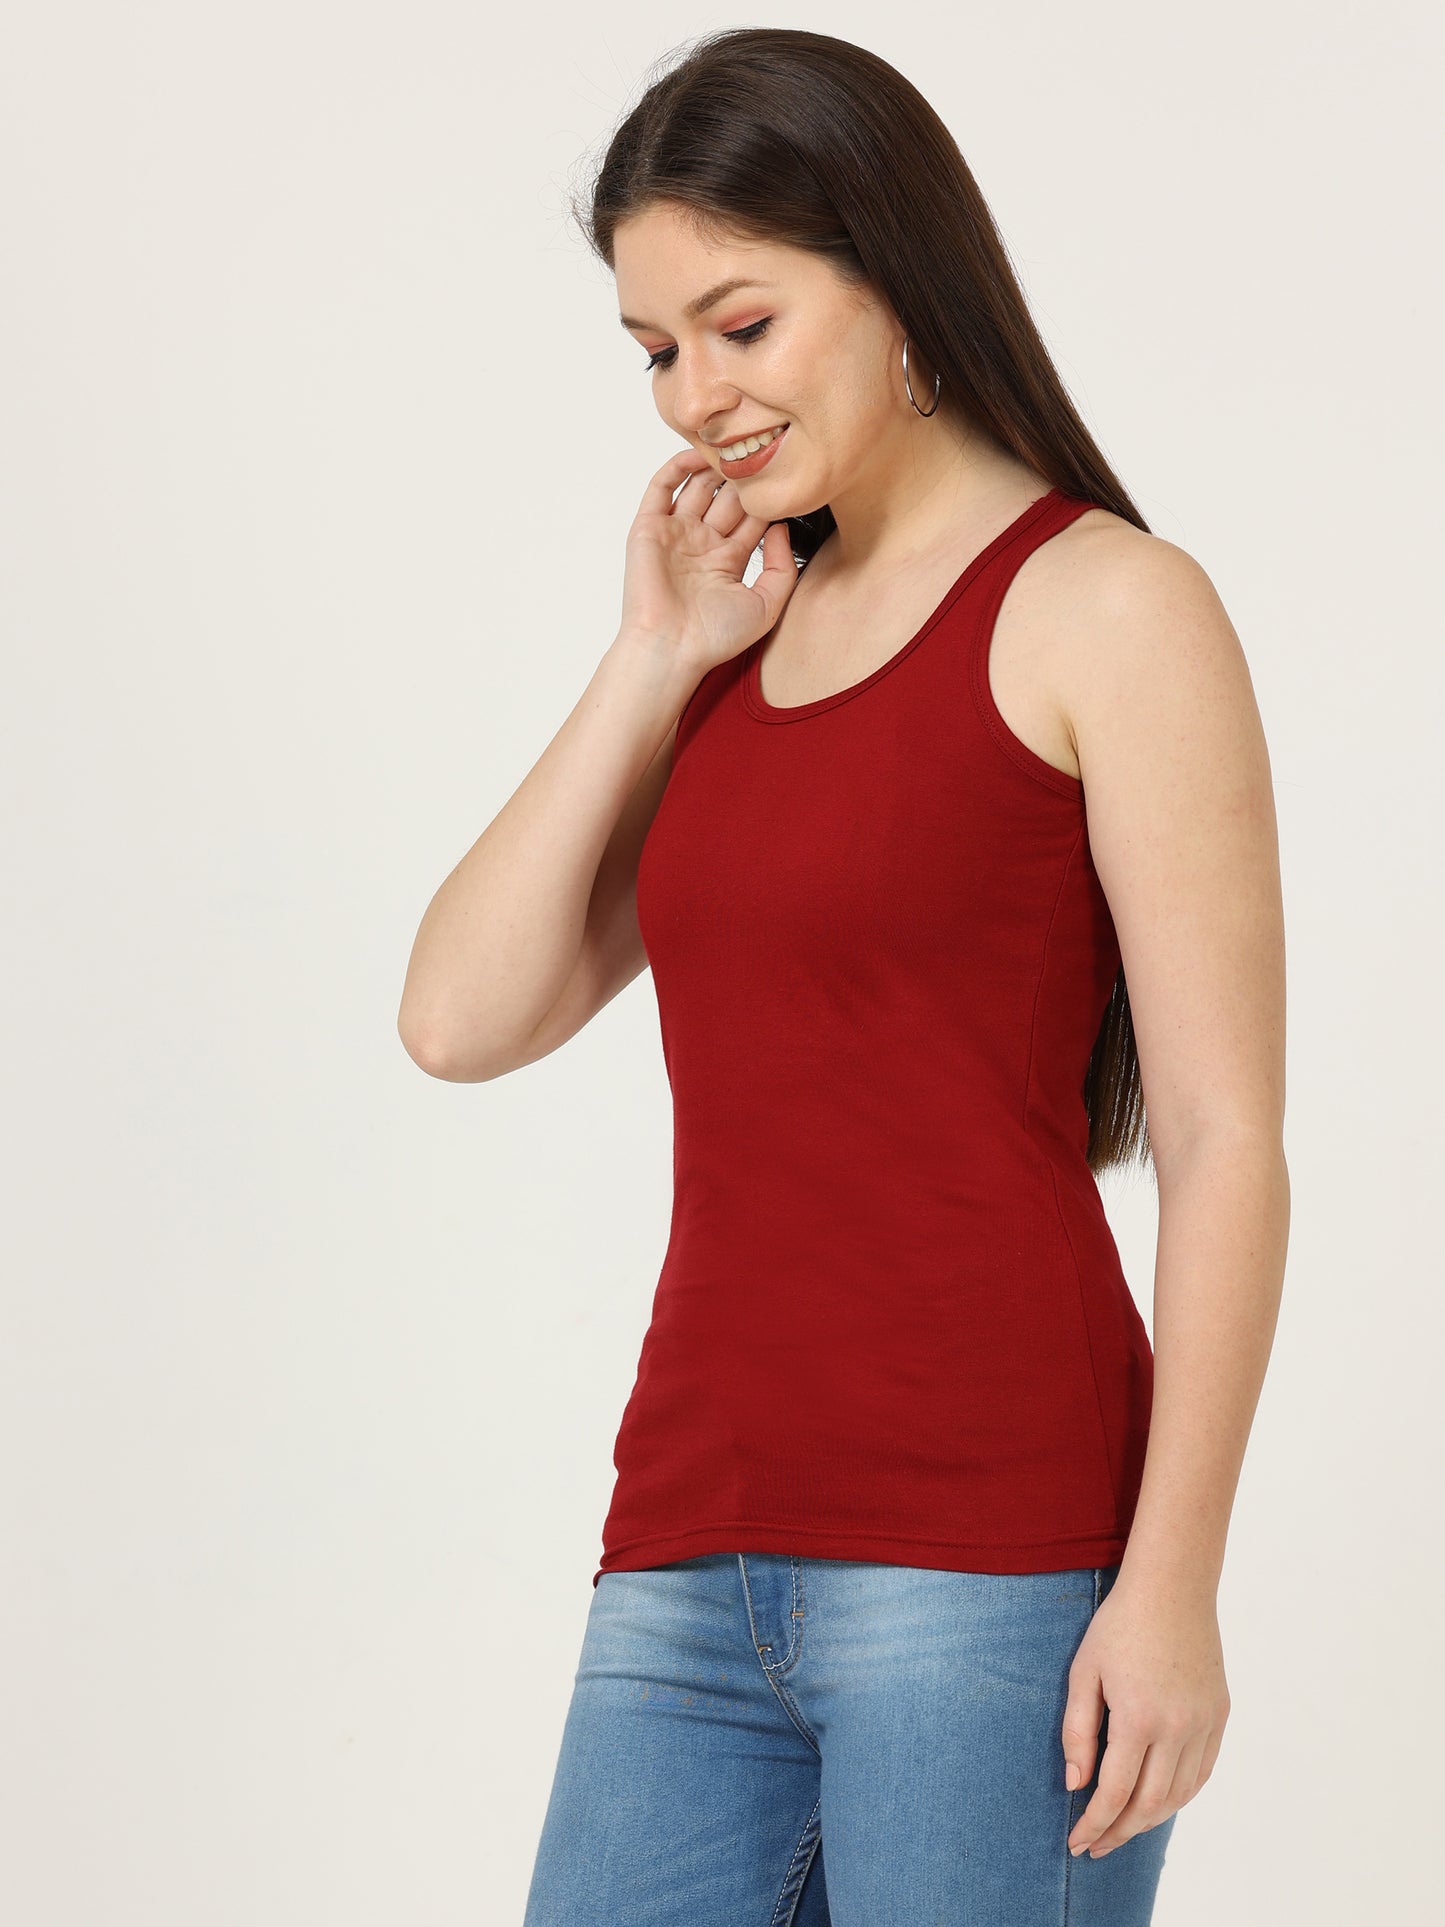 Women's Cotton Plain Sleeveless Maroon Color Top